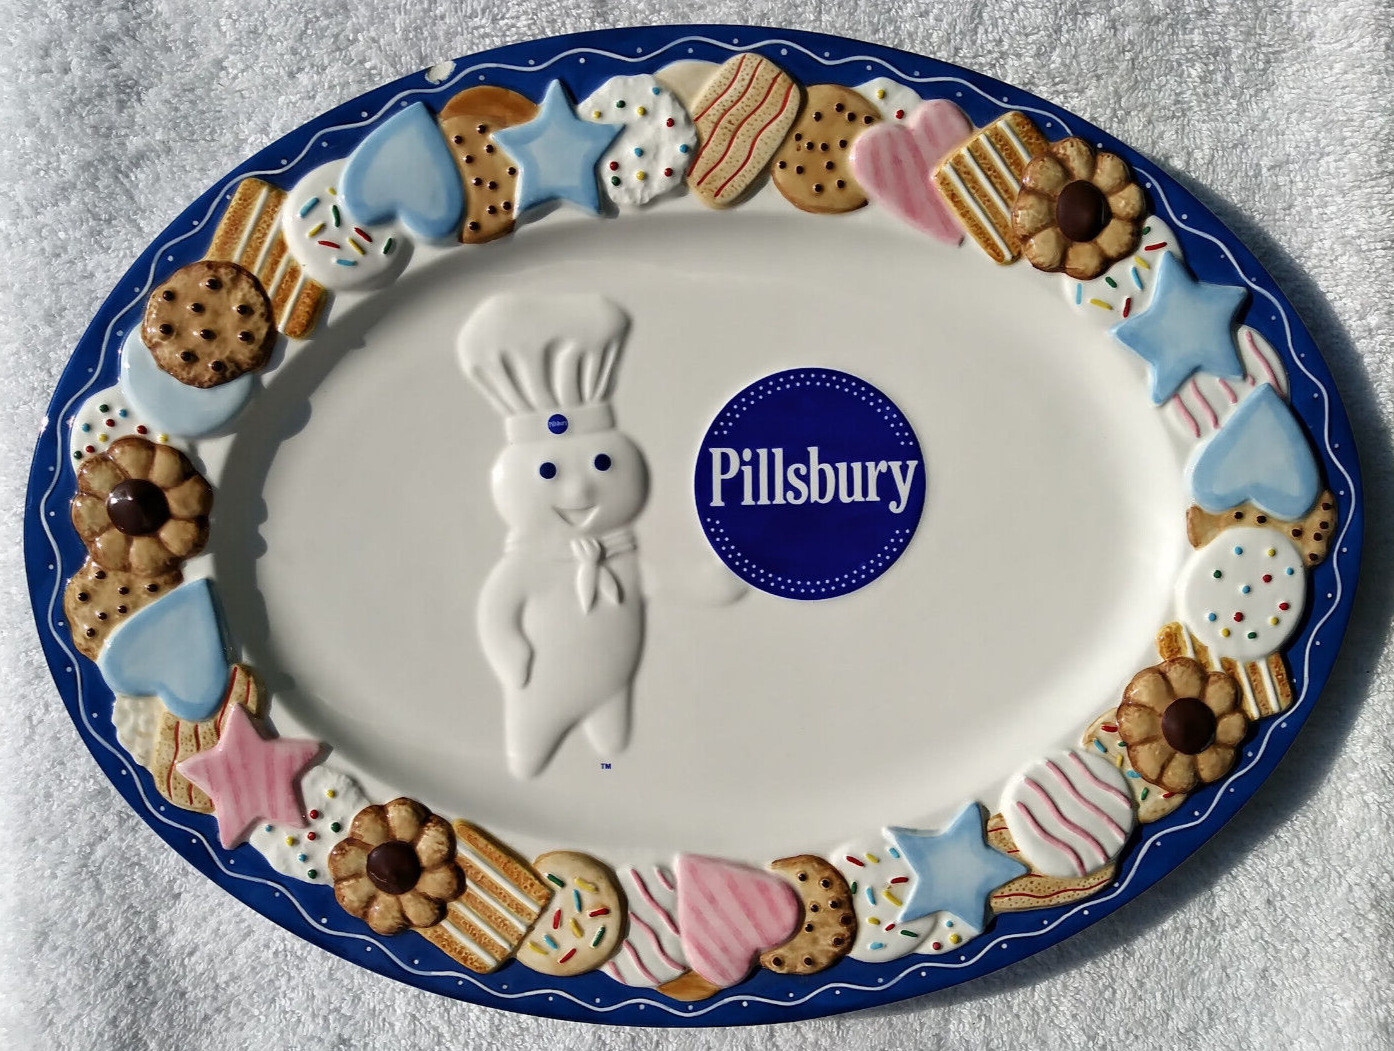 Pillsbury Doughboy Cookie Platter by The Danbury Mint 2002